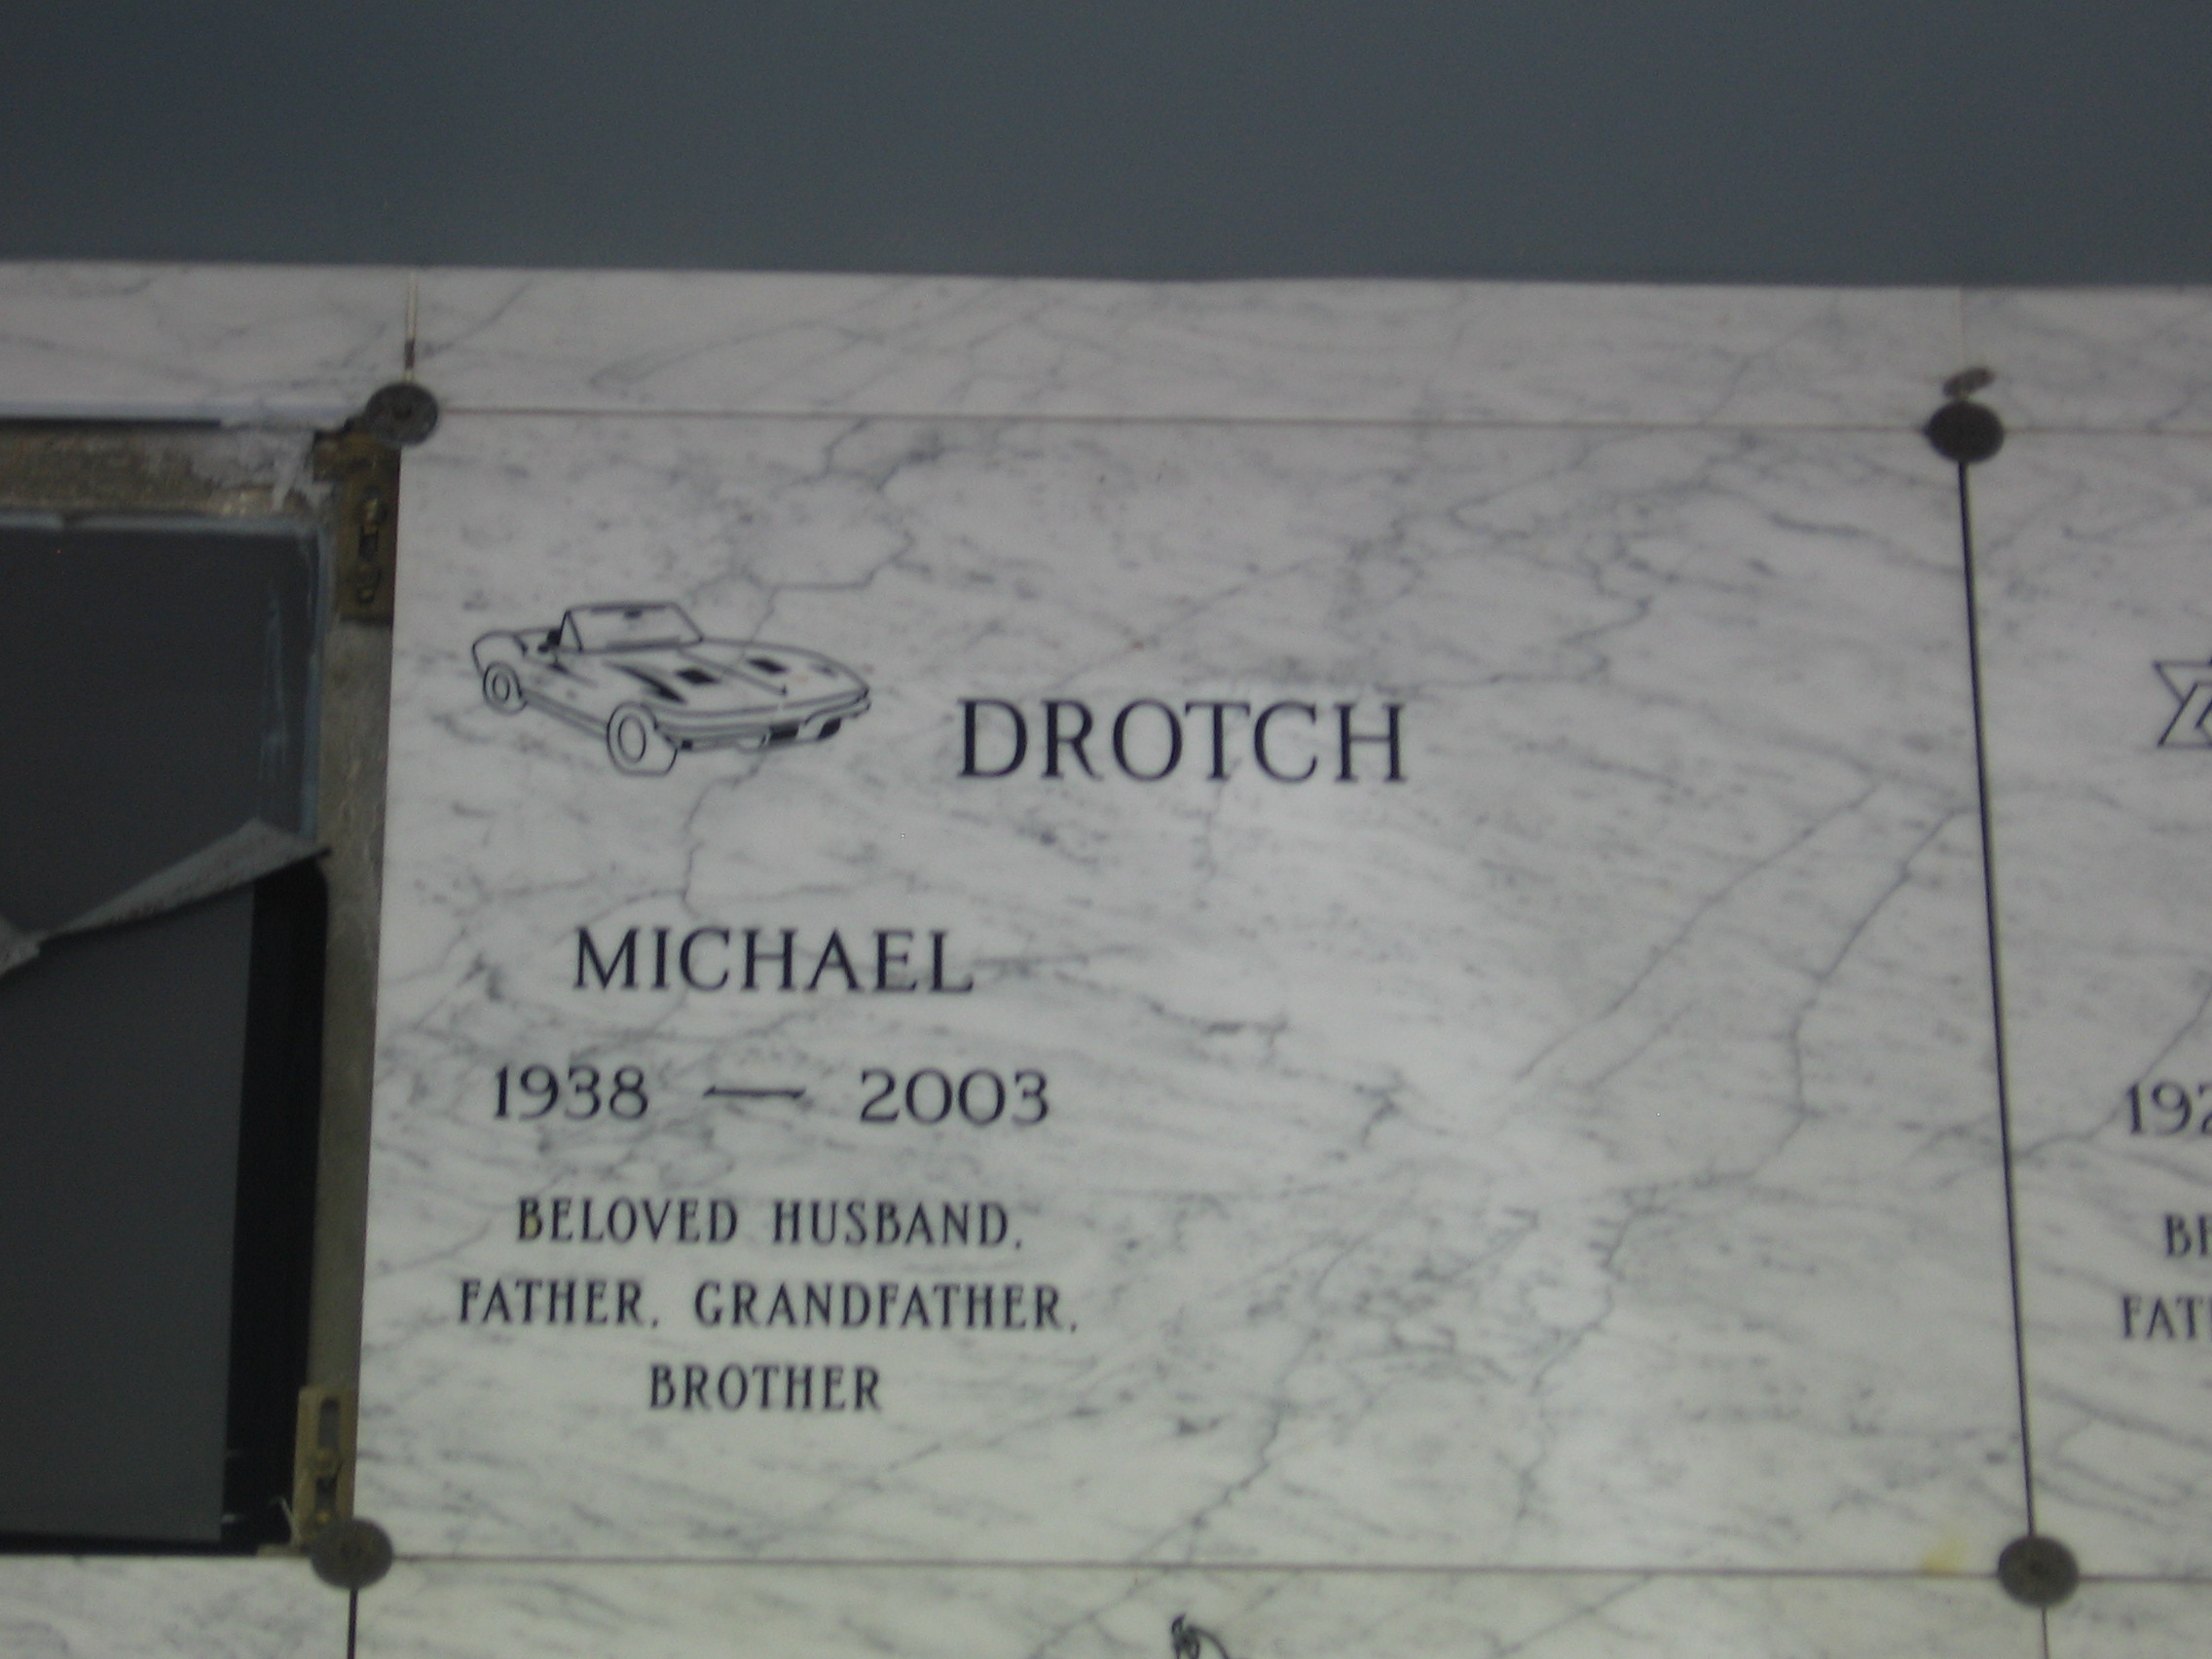 Michael Drotch